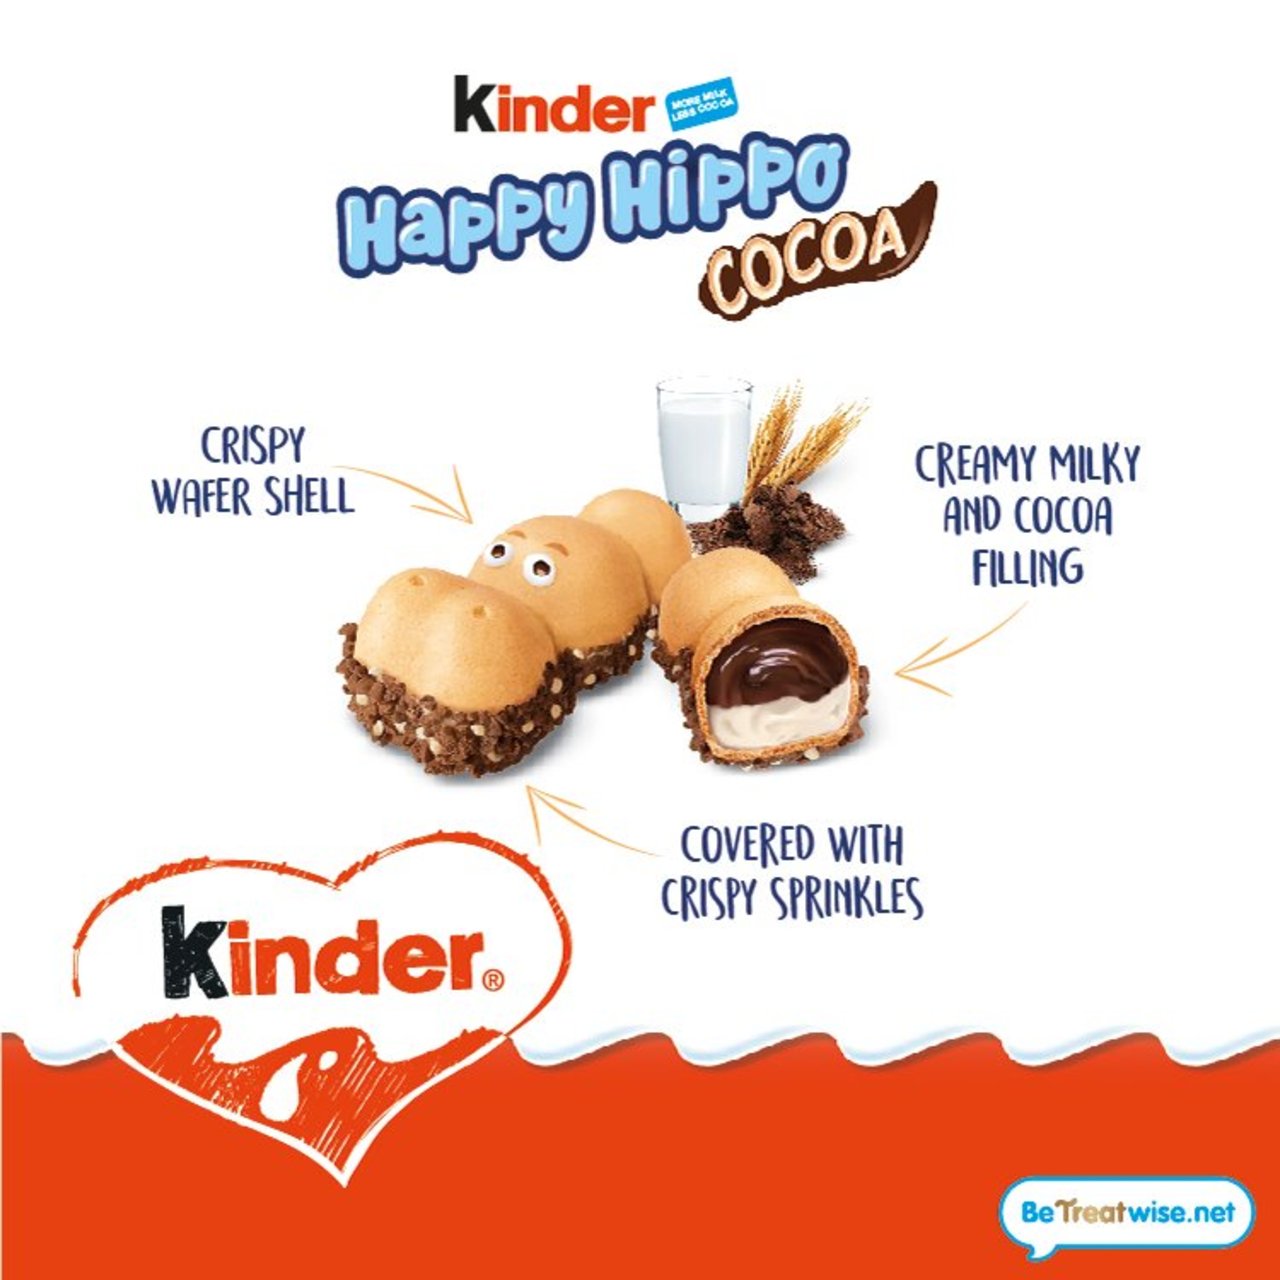 Kinder 5 Happy Hippo Milk & Cocoa Cream Biscuits 103.5g